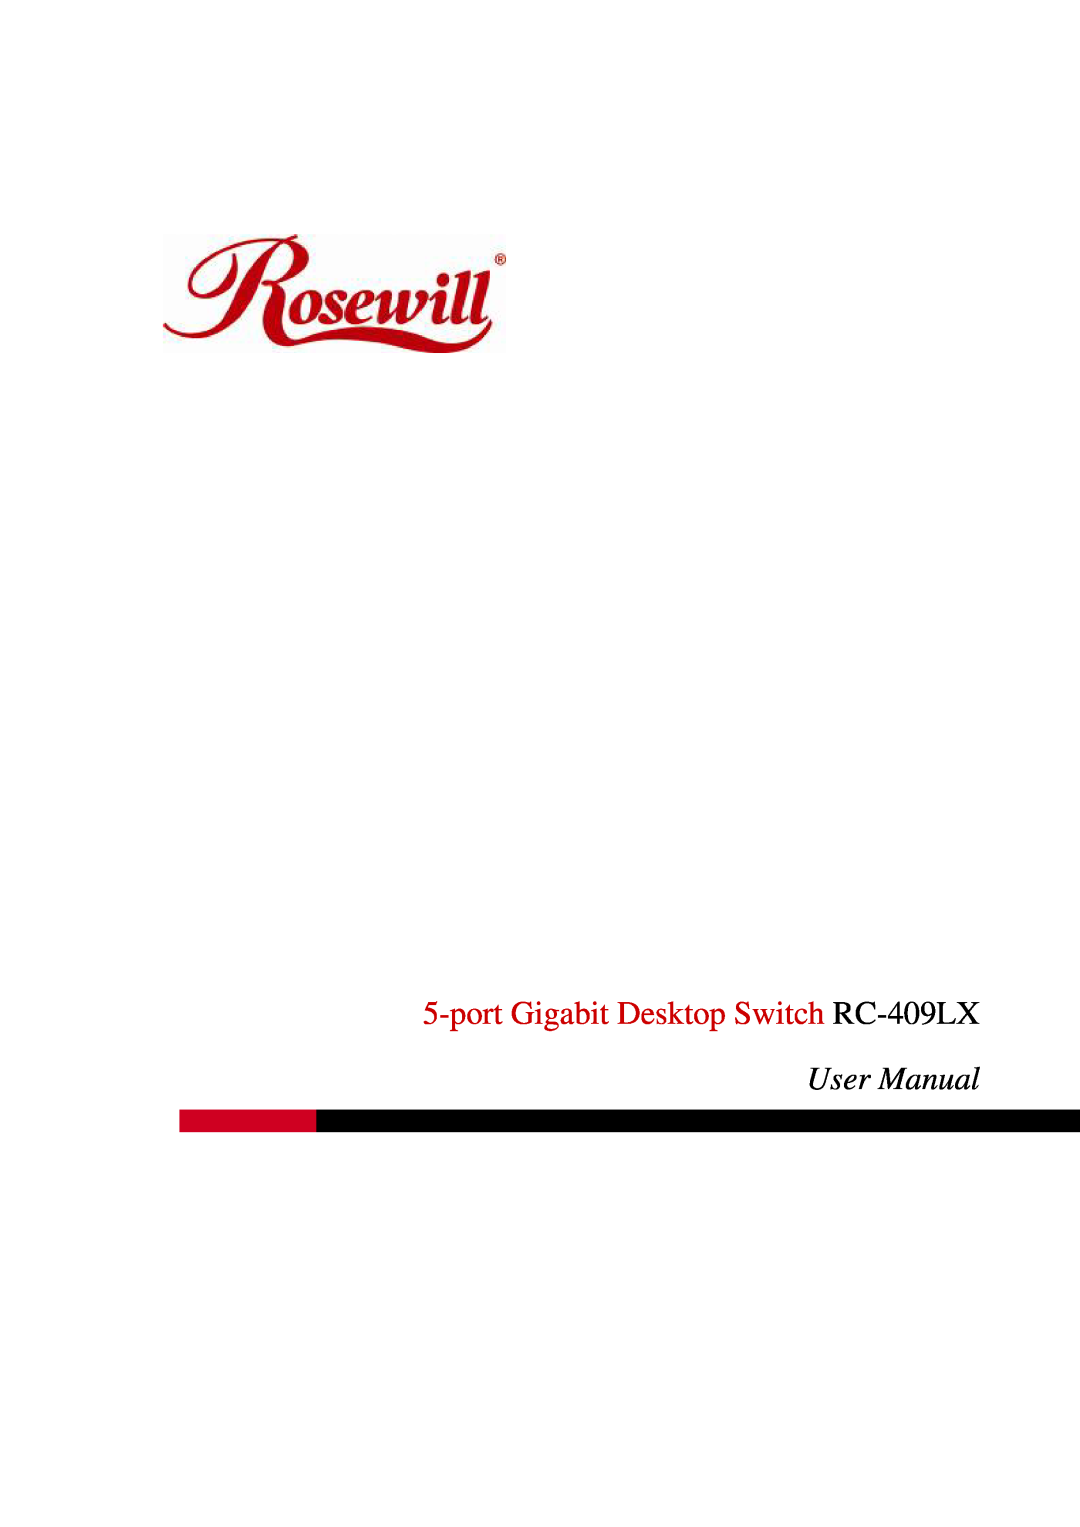 Rosewill user manual port Gigabit Desktop Switch RC-409LX, User Manual 